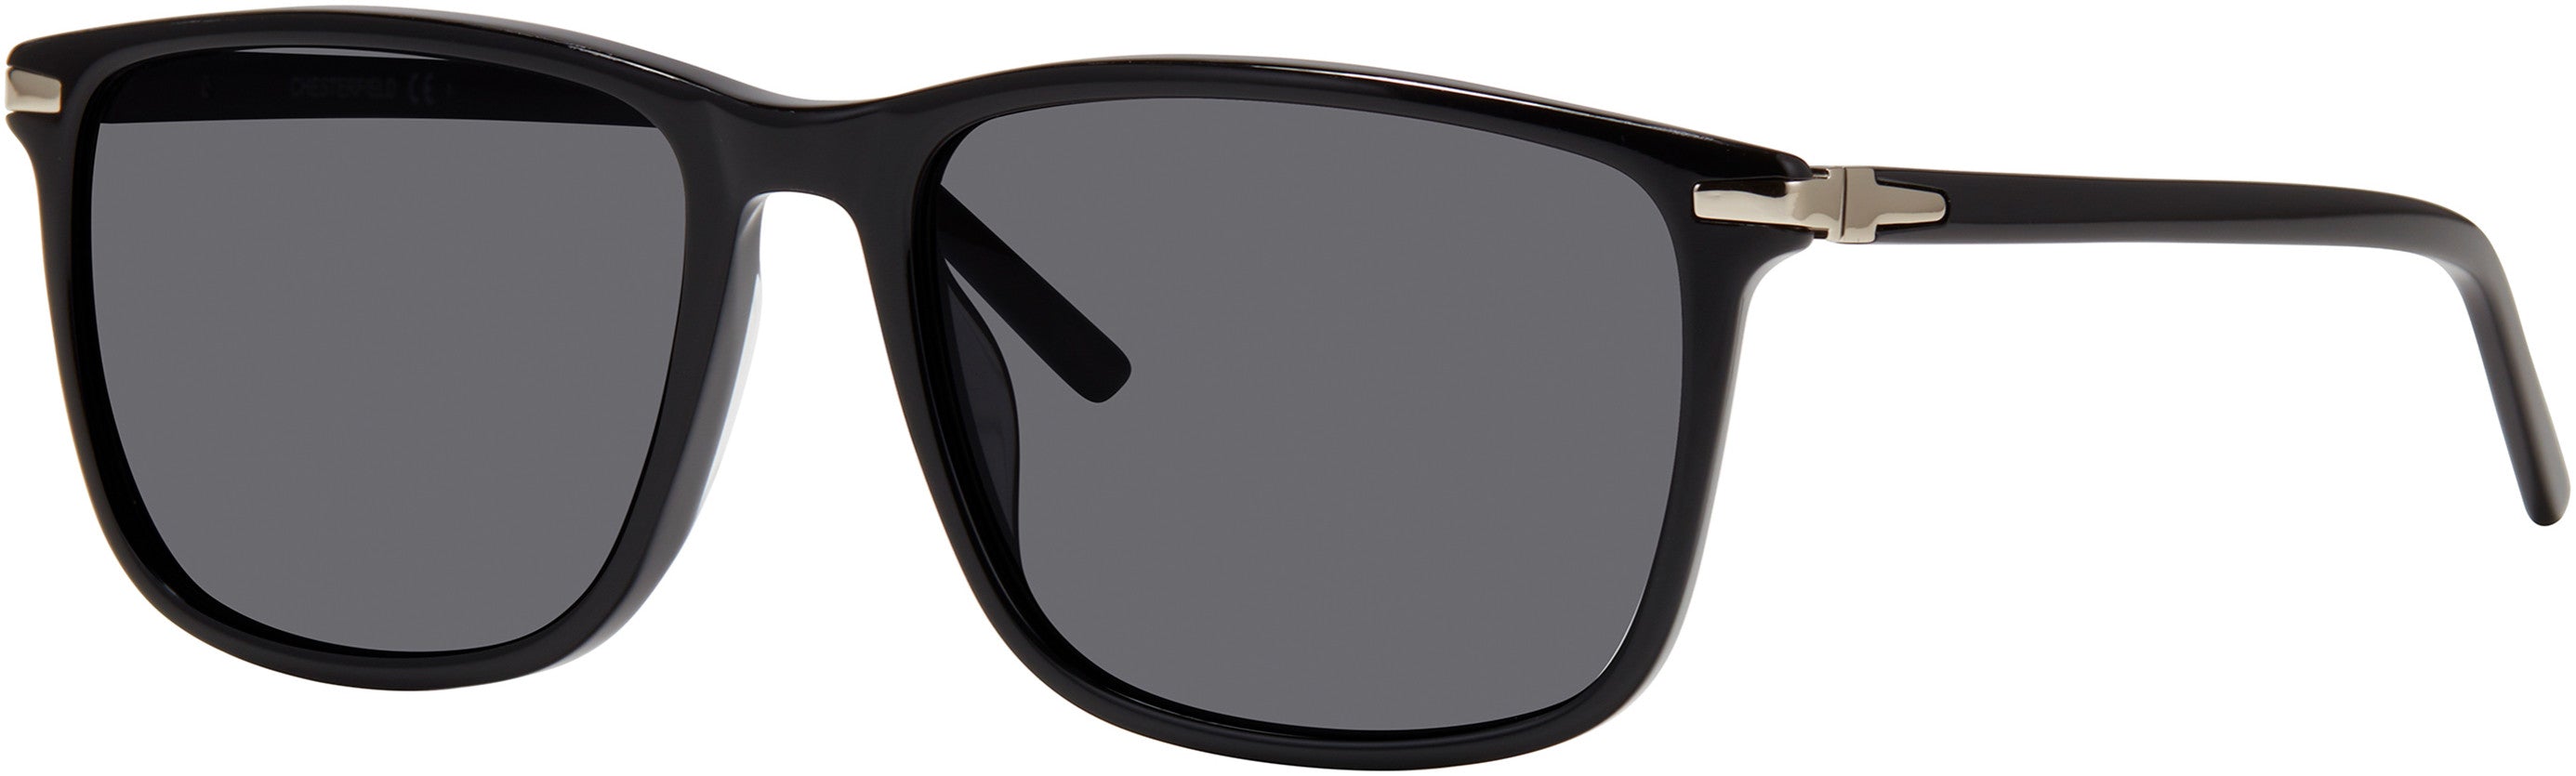  Chesterfield 10/S Rectangular Sunglasses 0807-0807  Black (M9 Gray Pz)